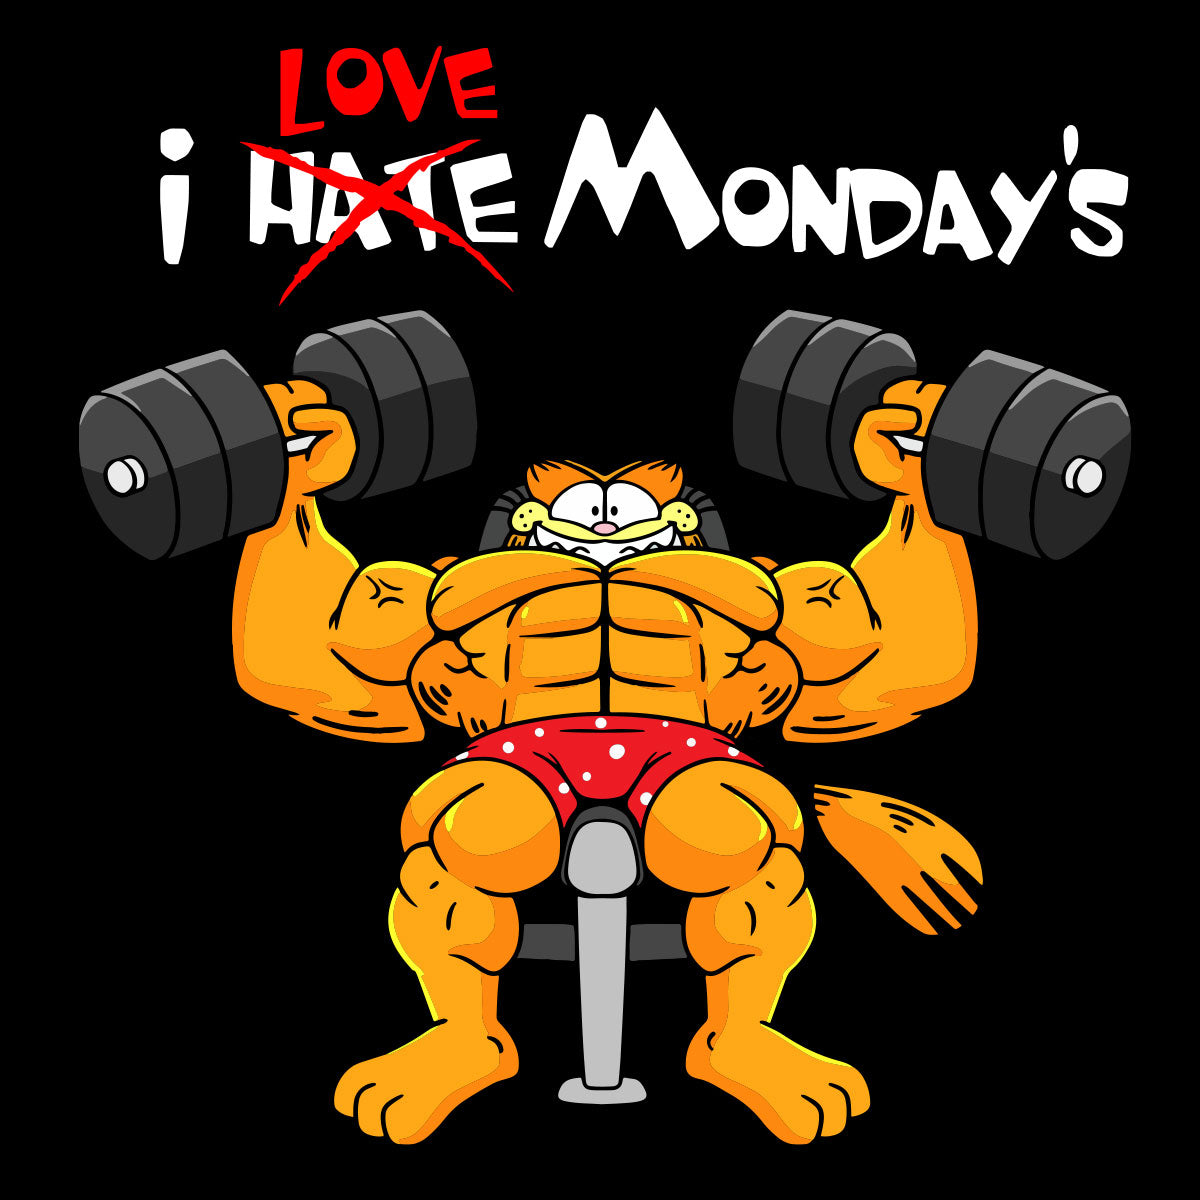 I Love Monday's